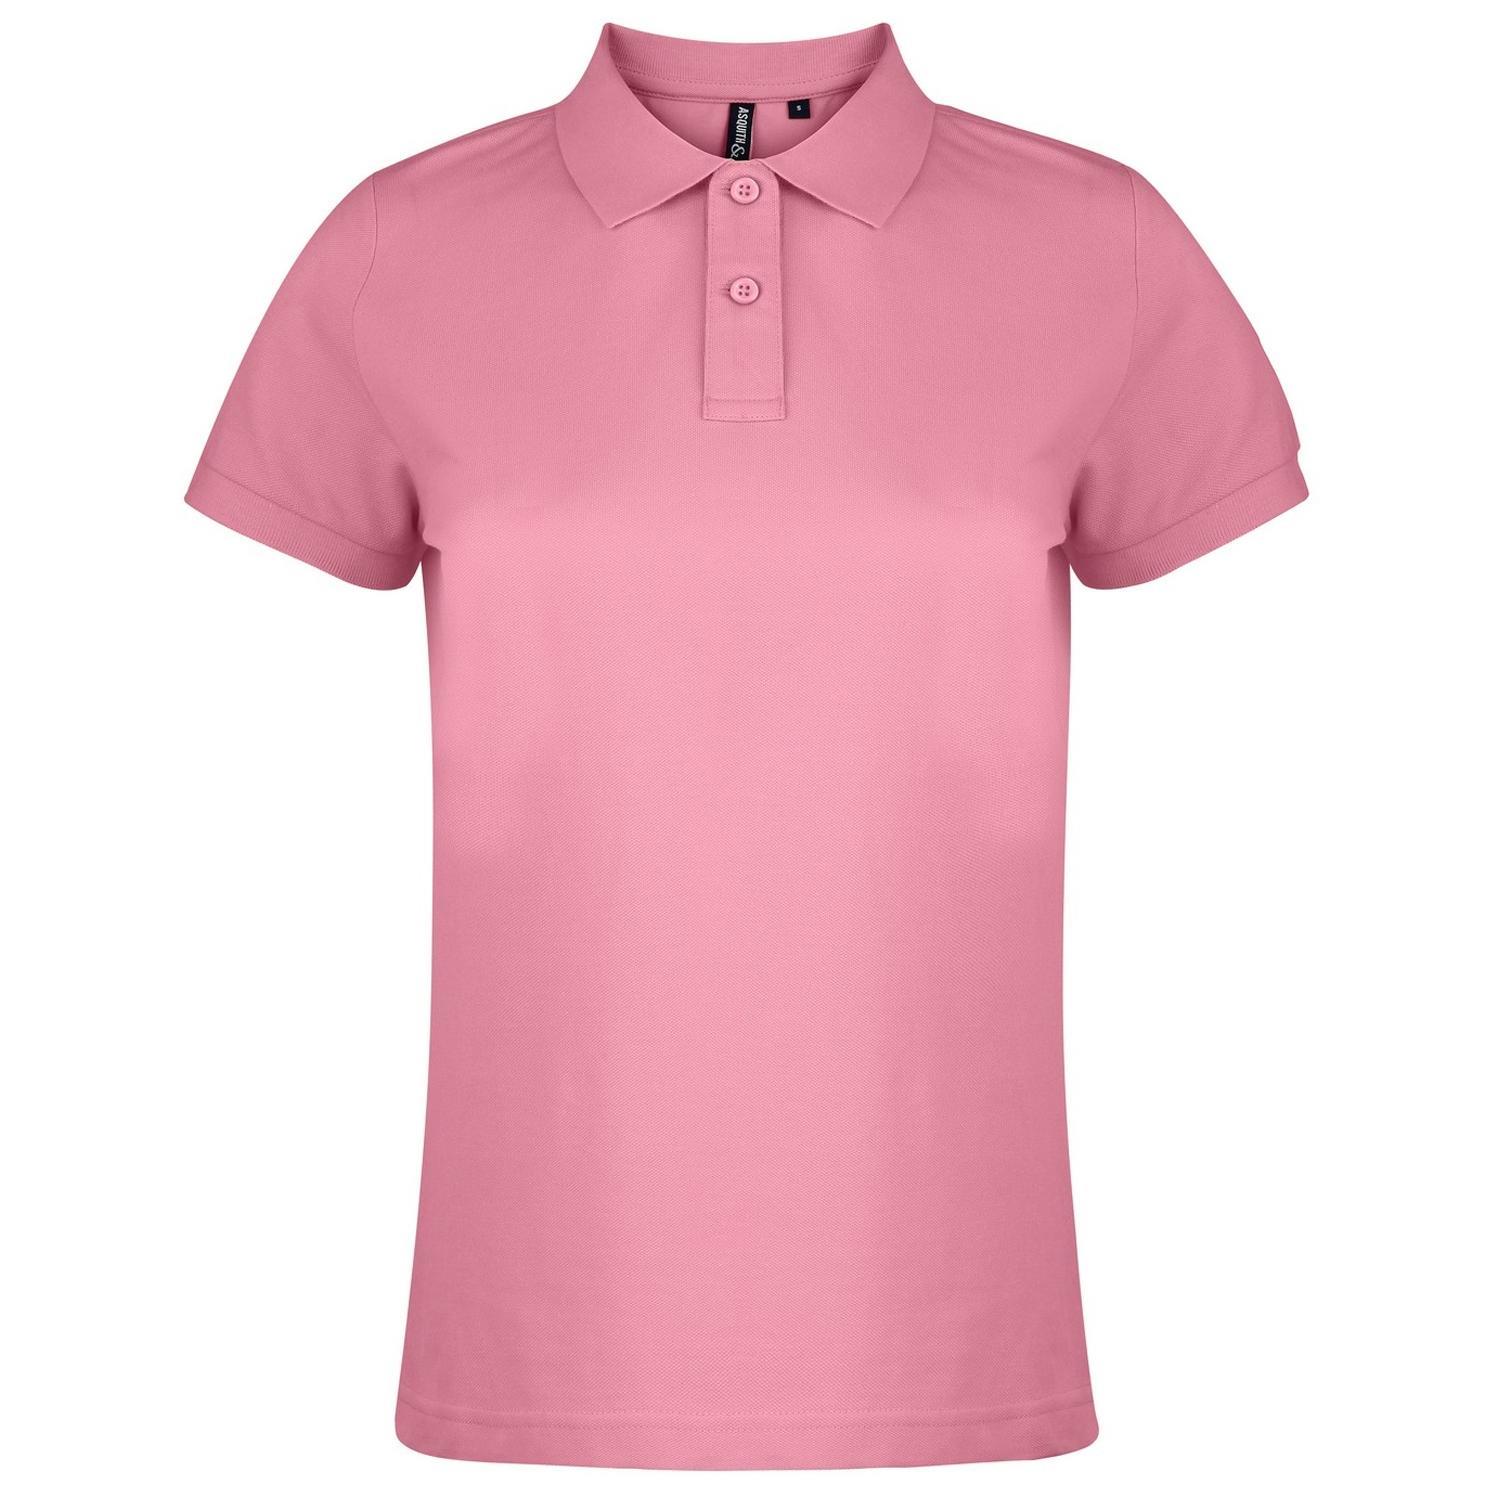 Asquith & Fox Womens/Ladies Plain Short Sleeve Polo Shirt (Pink Carnation) (L)